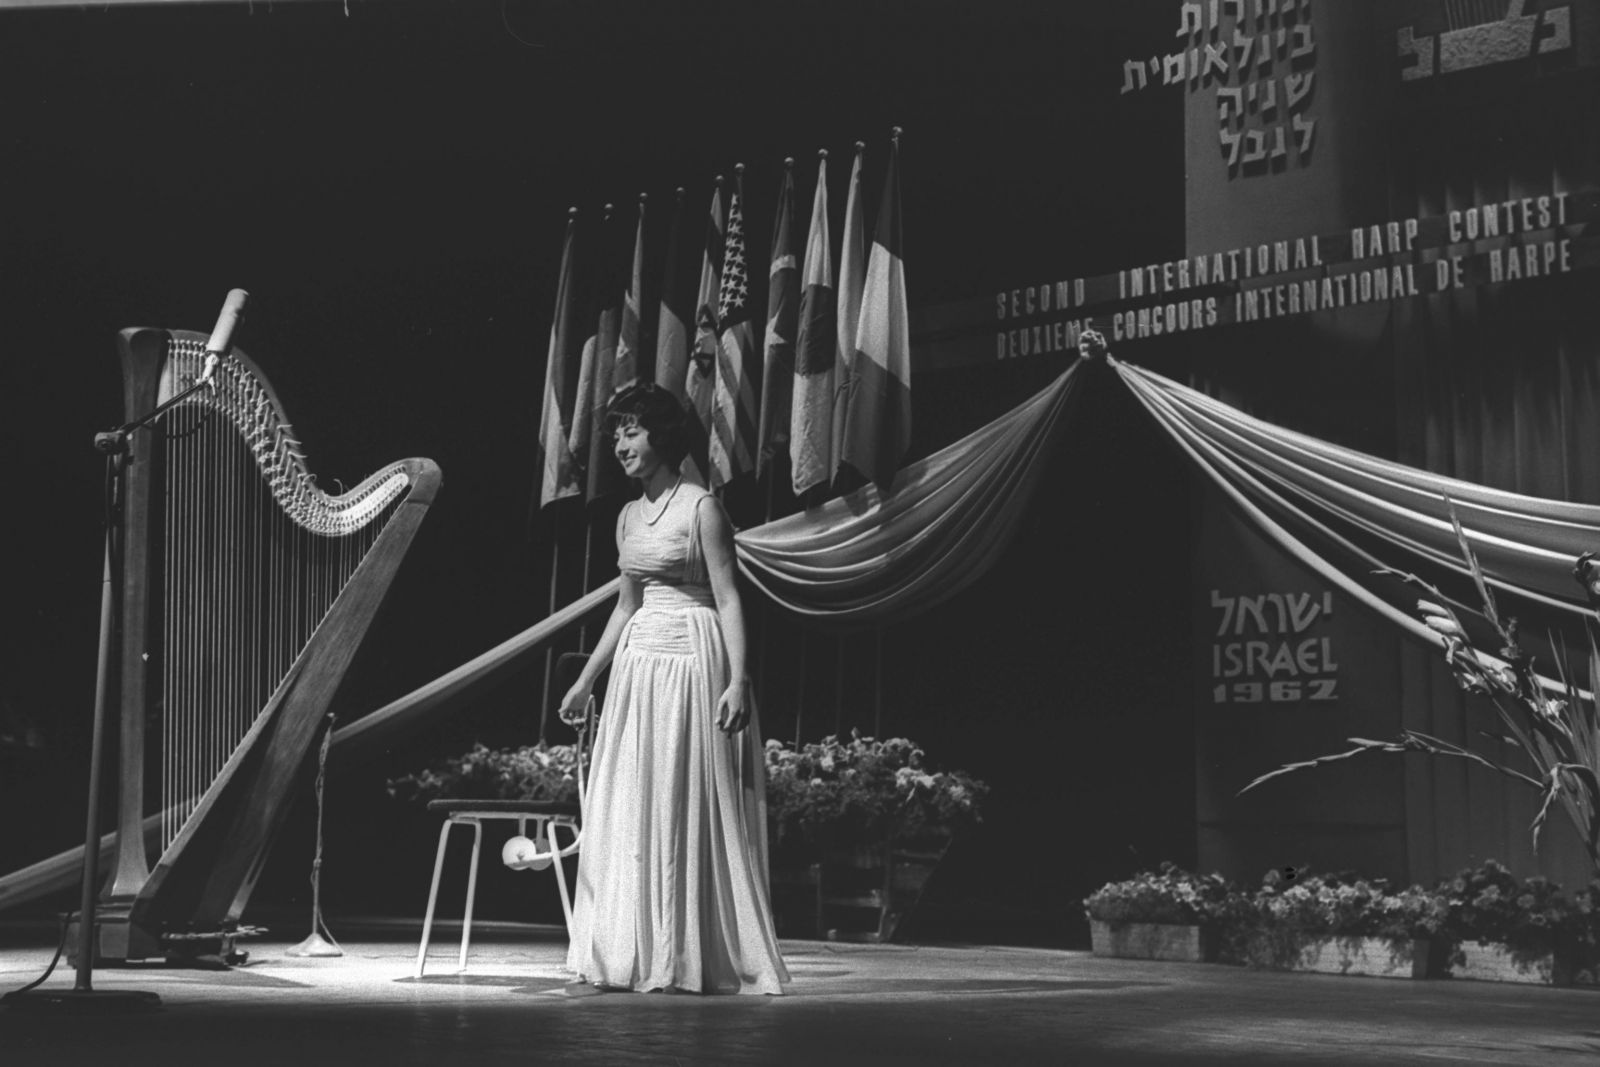 Susanna Mildonian at the “Second International Harp Contest in Israël”, 1959.